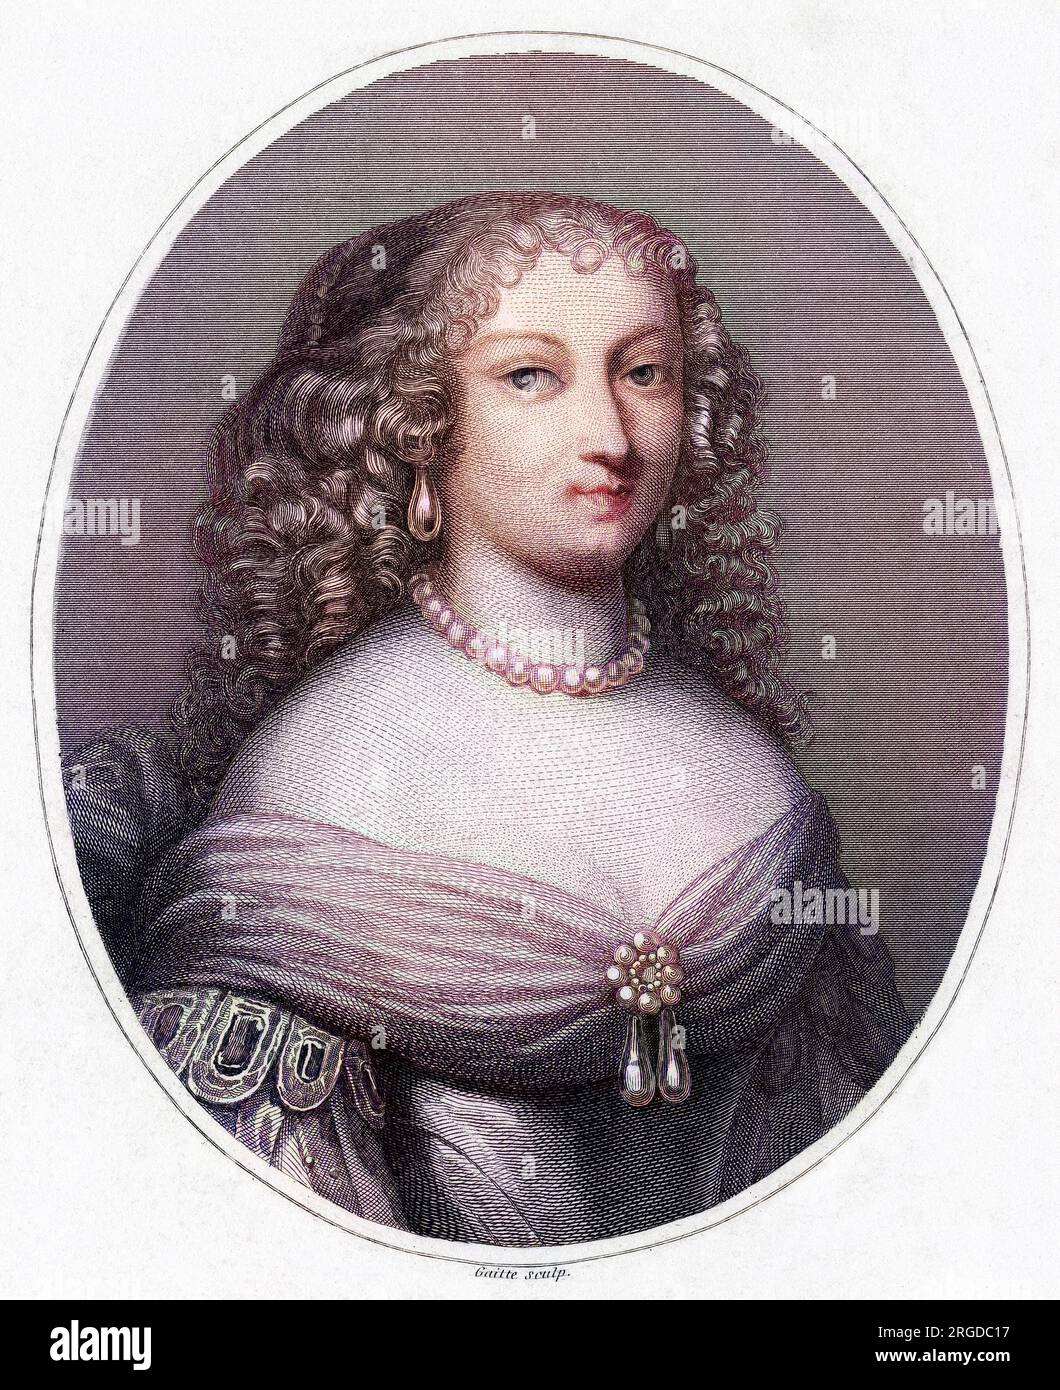 MARIE DE HAUTEFORT, duchesse de SCHOMBERG Influential French court lady, confidante of cardinal Richelieu. Stock Photo